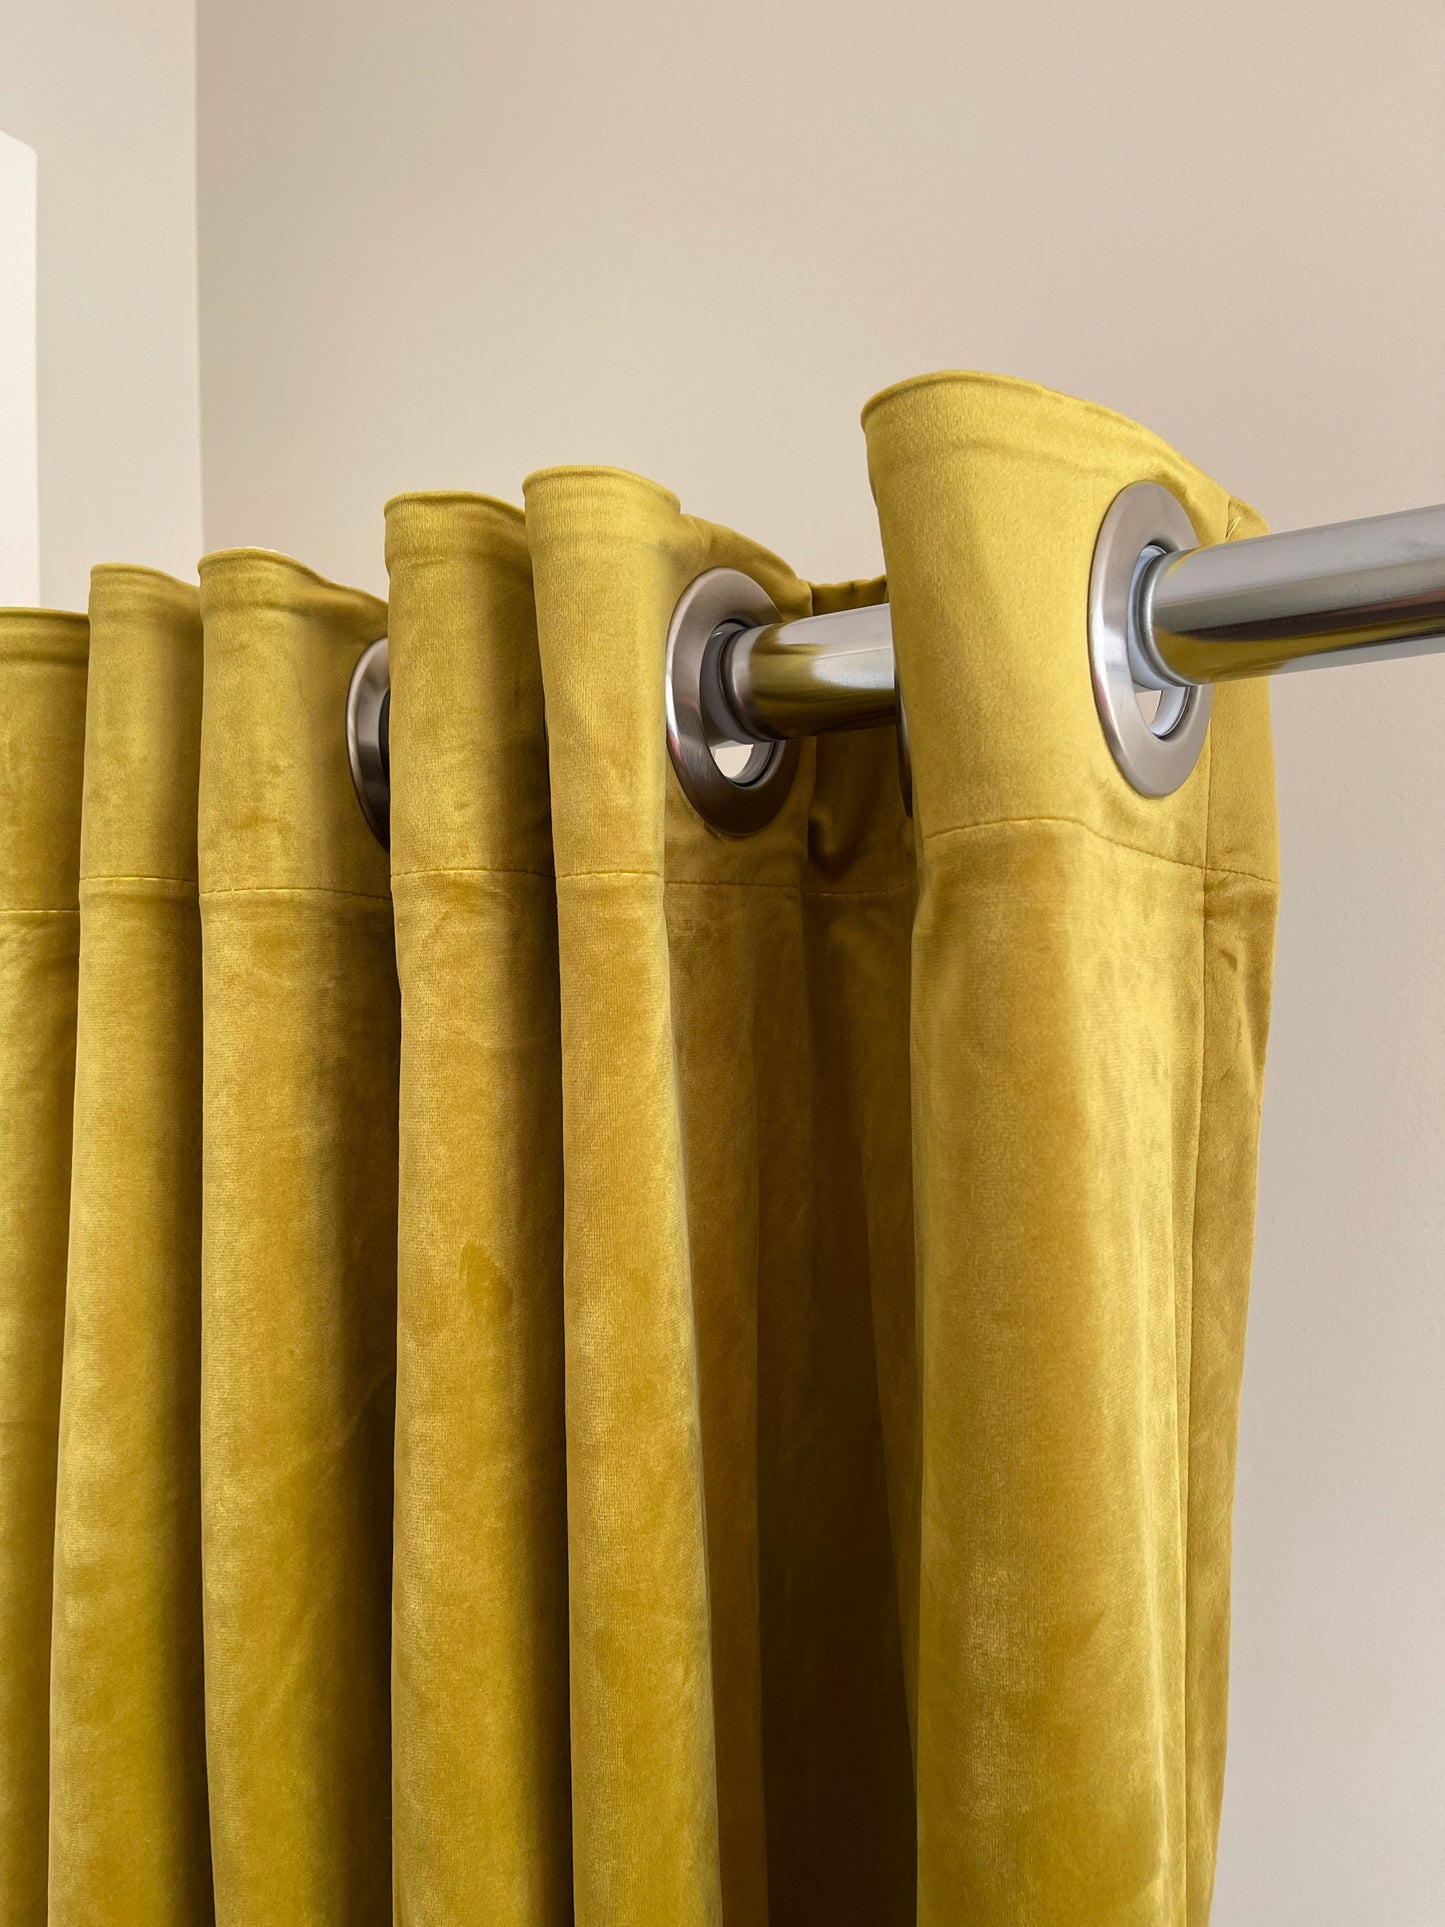 Velvet Curtain | Gold Green Blackout Curtain | velvet curtain panels | Curtain Panels | Custom Curtains